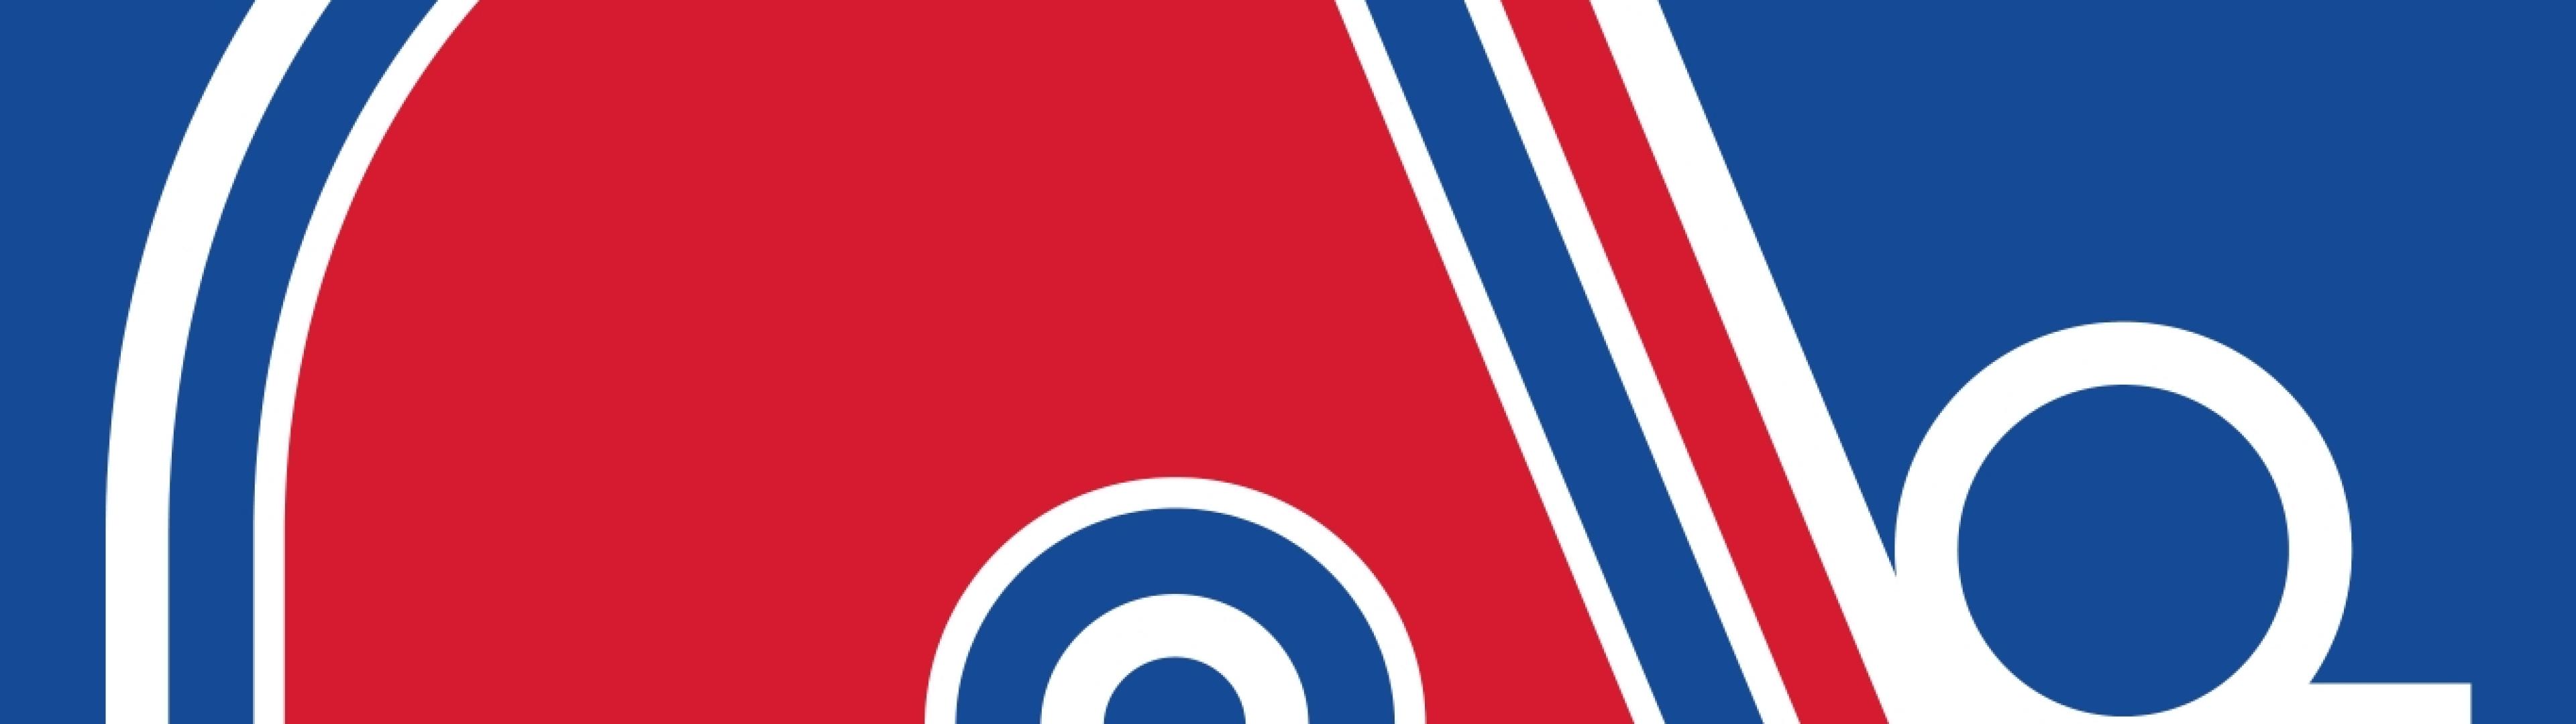 Logos Quebec Nordiques HD Wallpaper Panies Brands